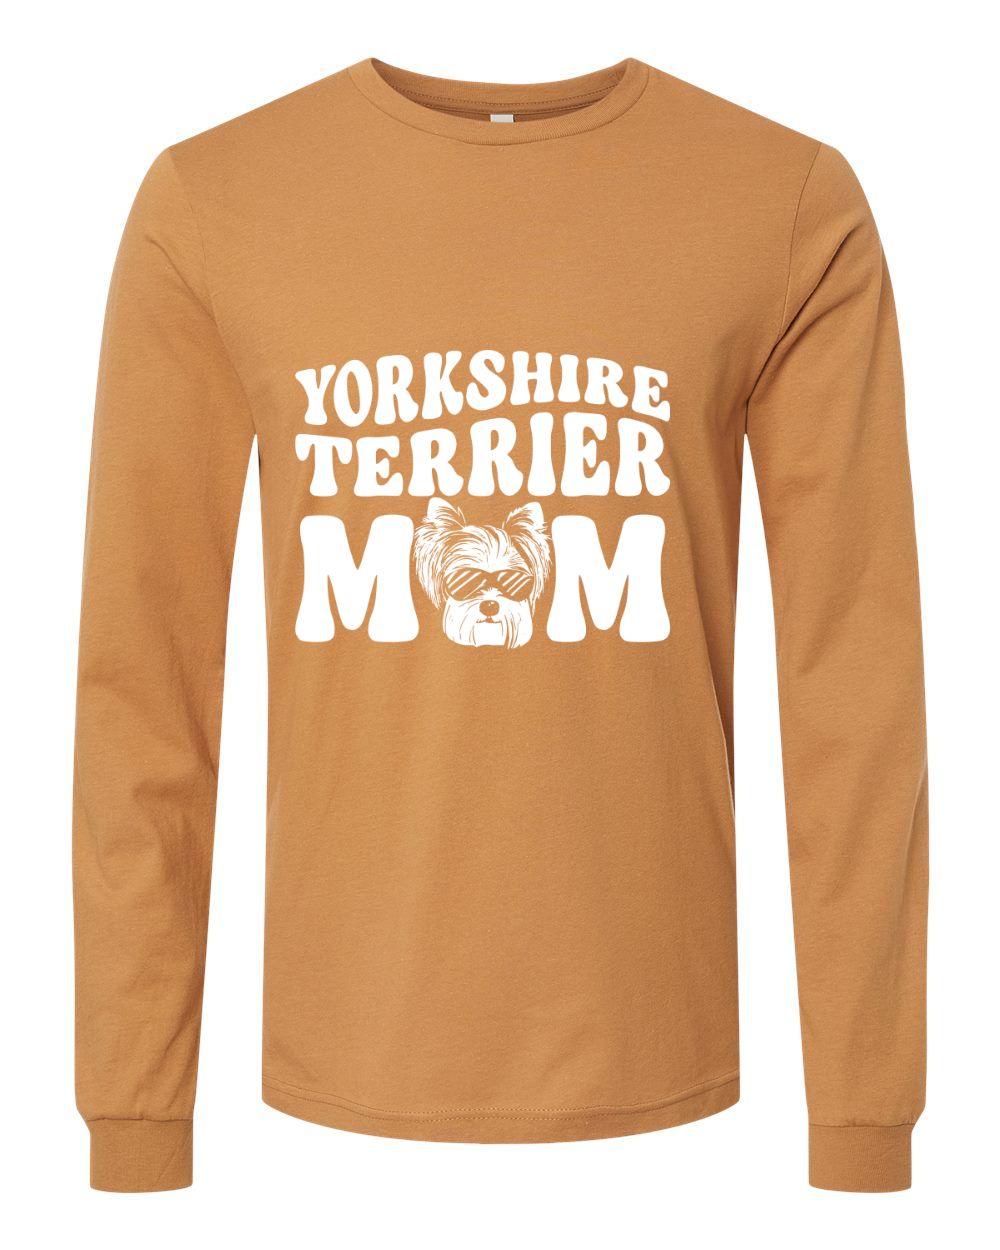 Yorkshire Terrier Mom Long Sleeves